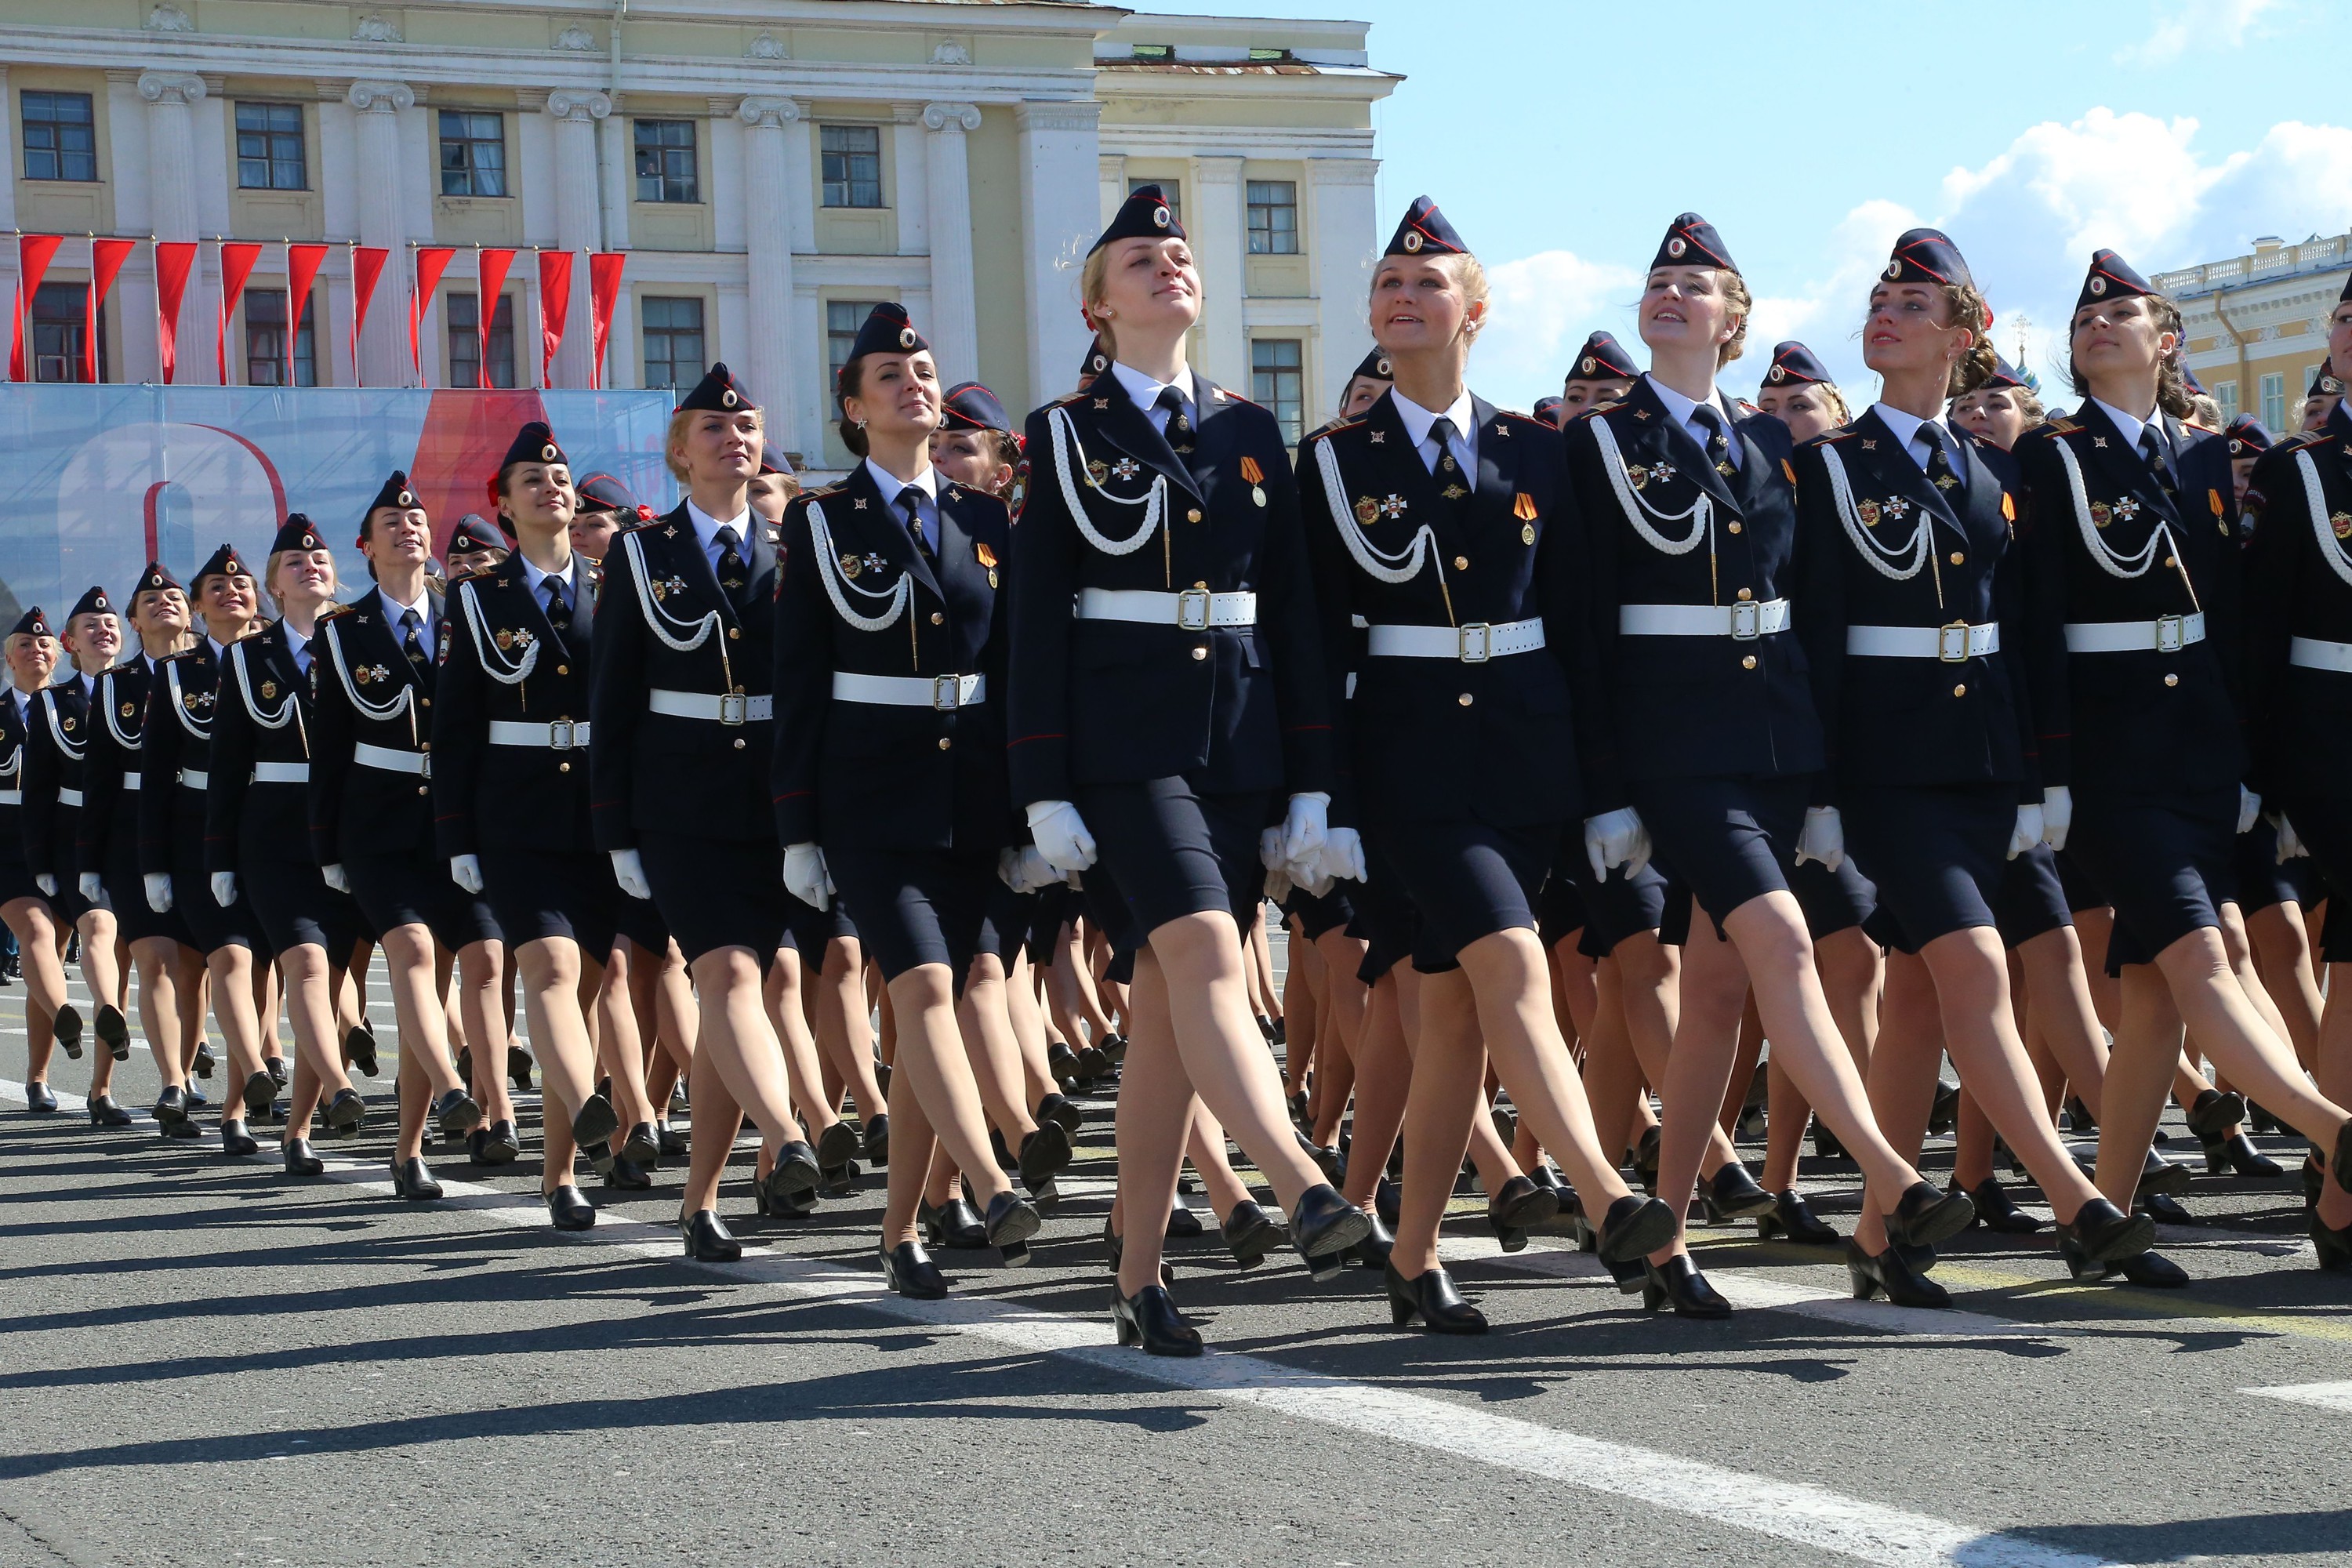 Случае параде. Женщины военные на параде. Девушки военнослужащие на параде. Девушки военные на параде Победы. Российские девушки на параде.